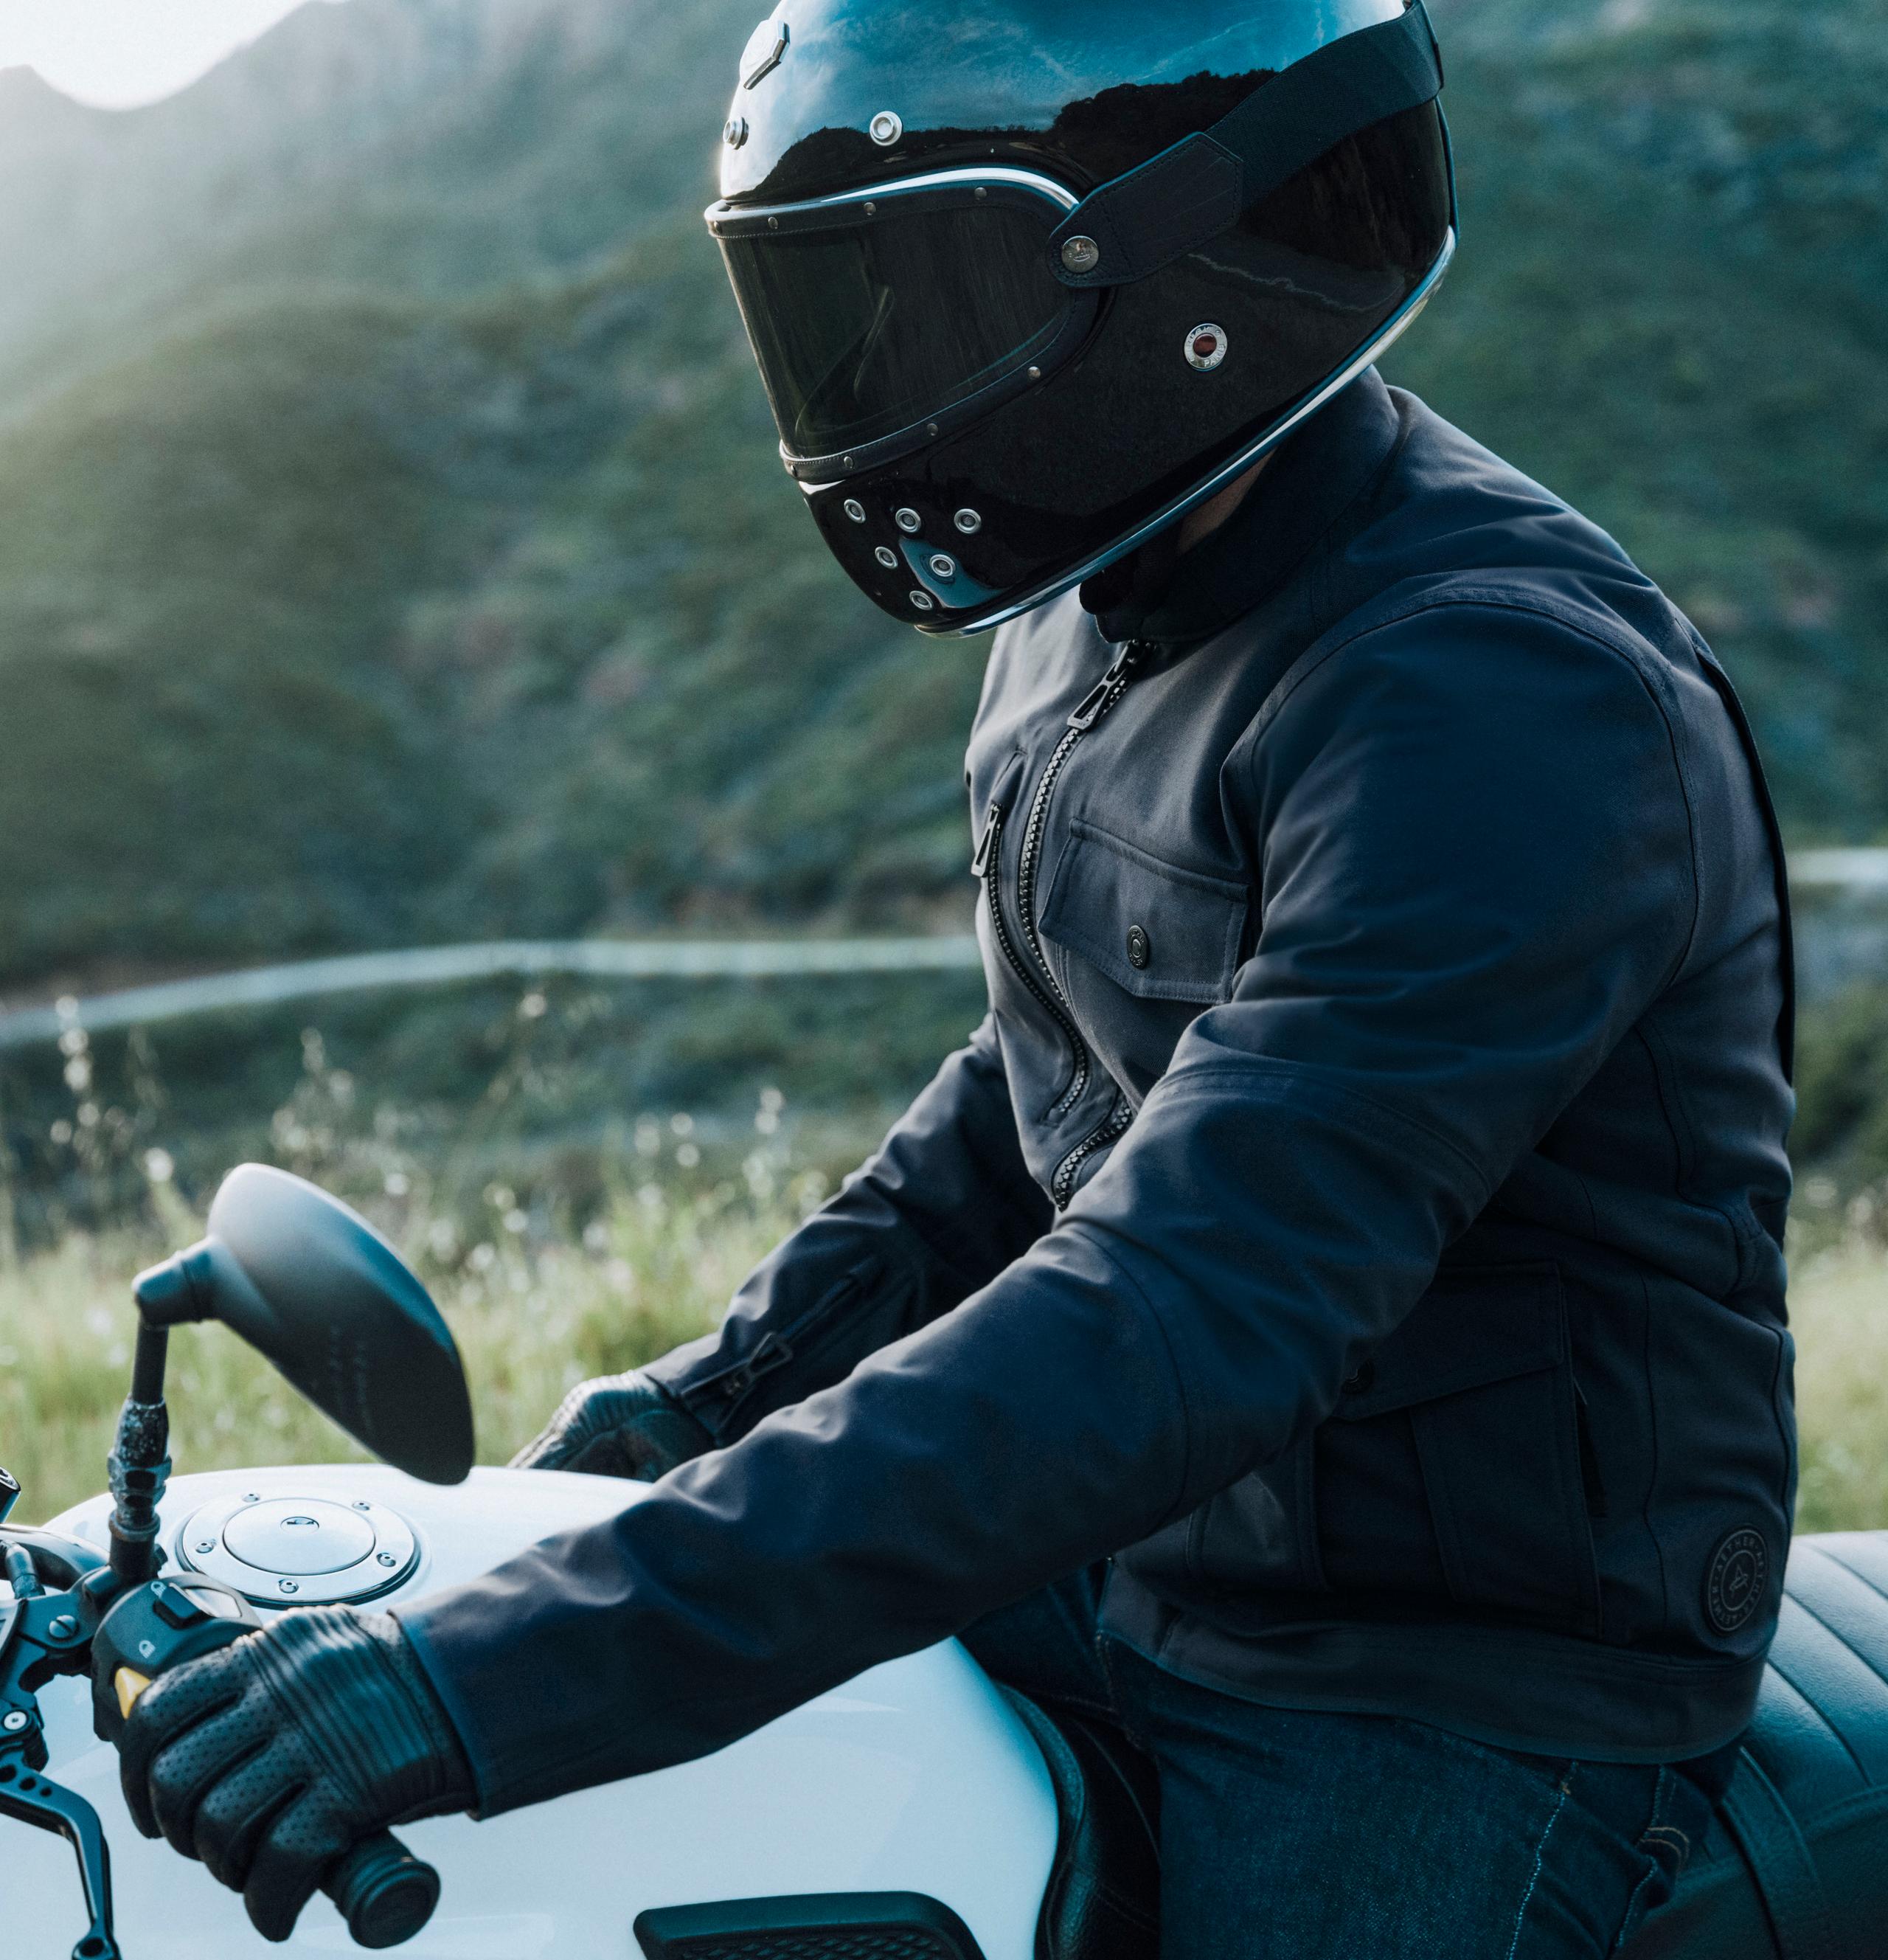 Man in Mulholland Motorcycle Jacket sitting on motorcycle roadside in Malibu hills